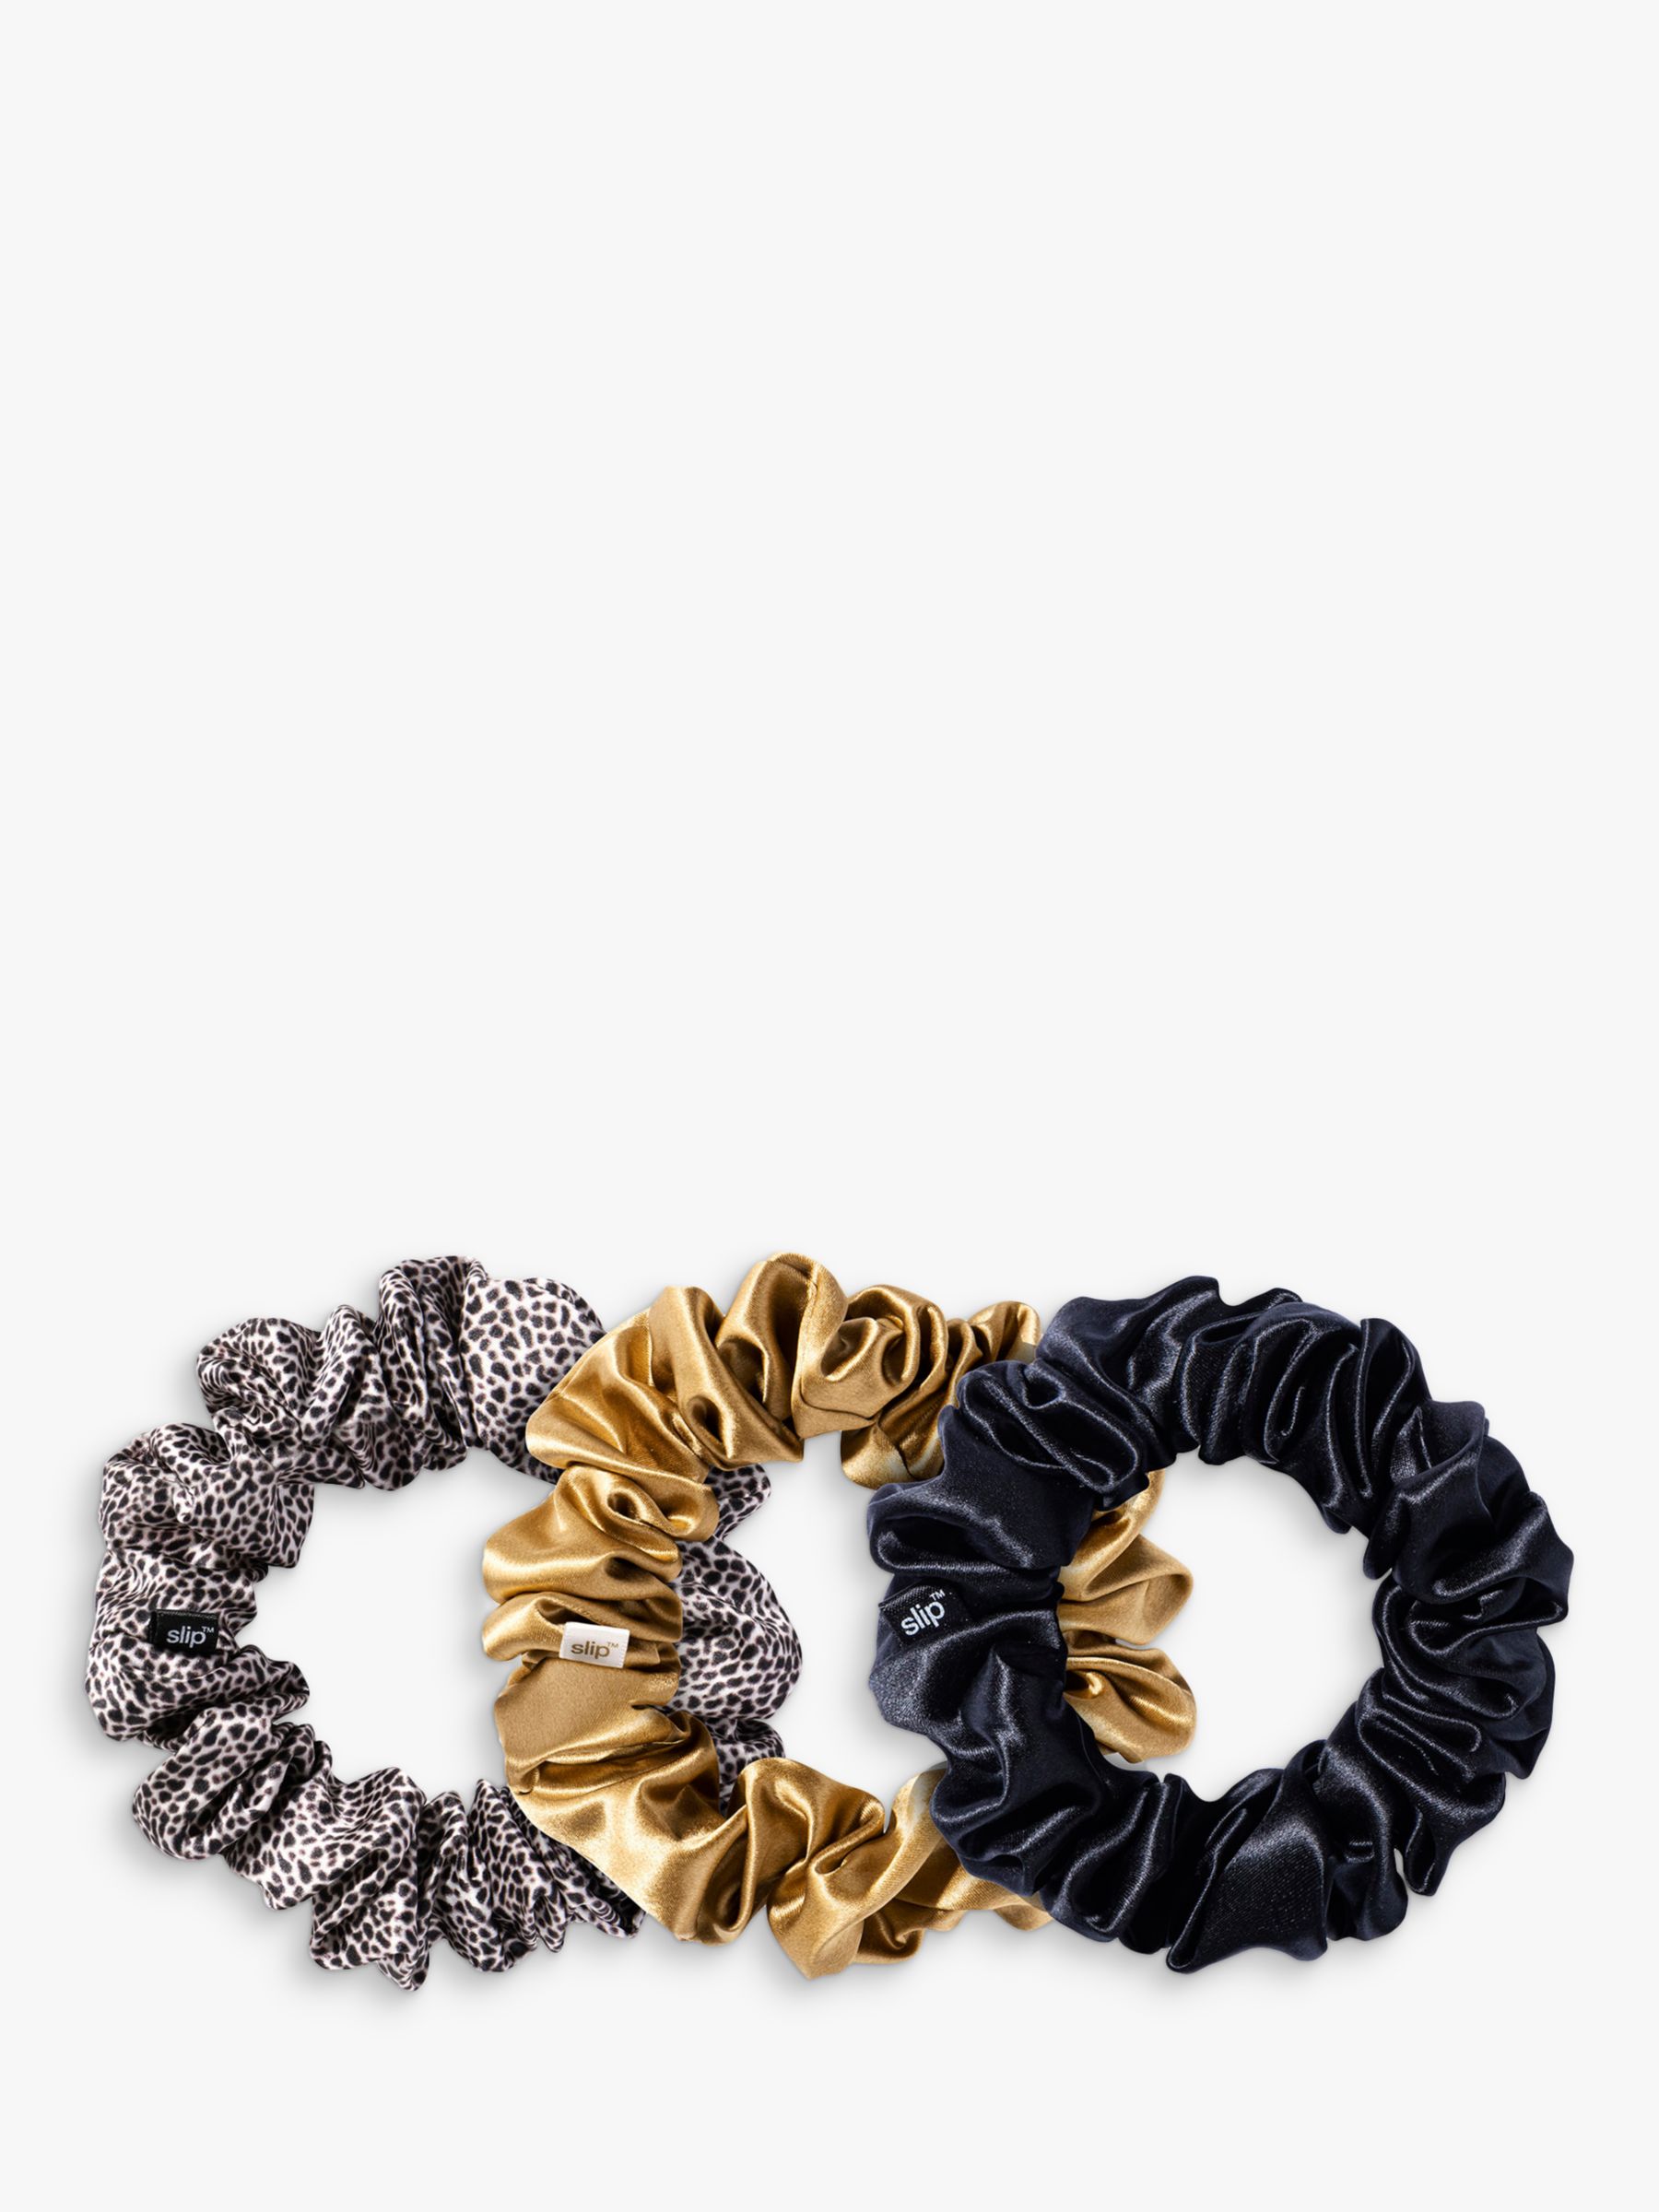 Slip® Pure Silk Scrunchies, Black, Leopard, Gold at John Lewis & Partners